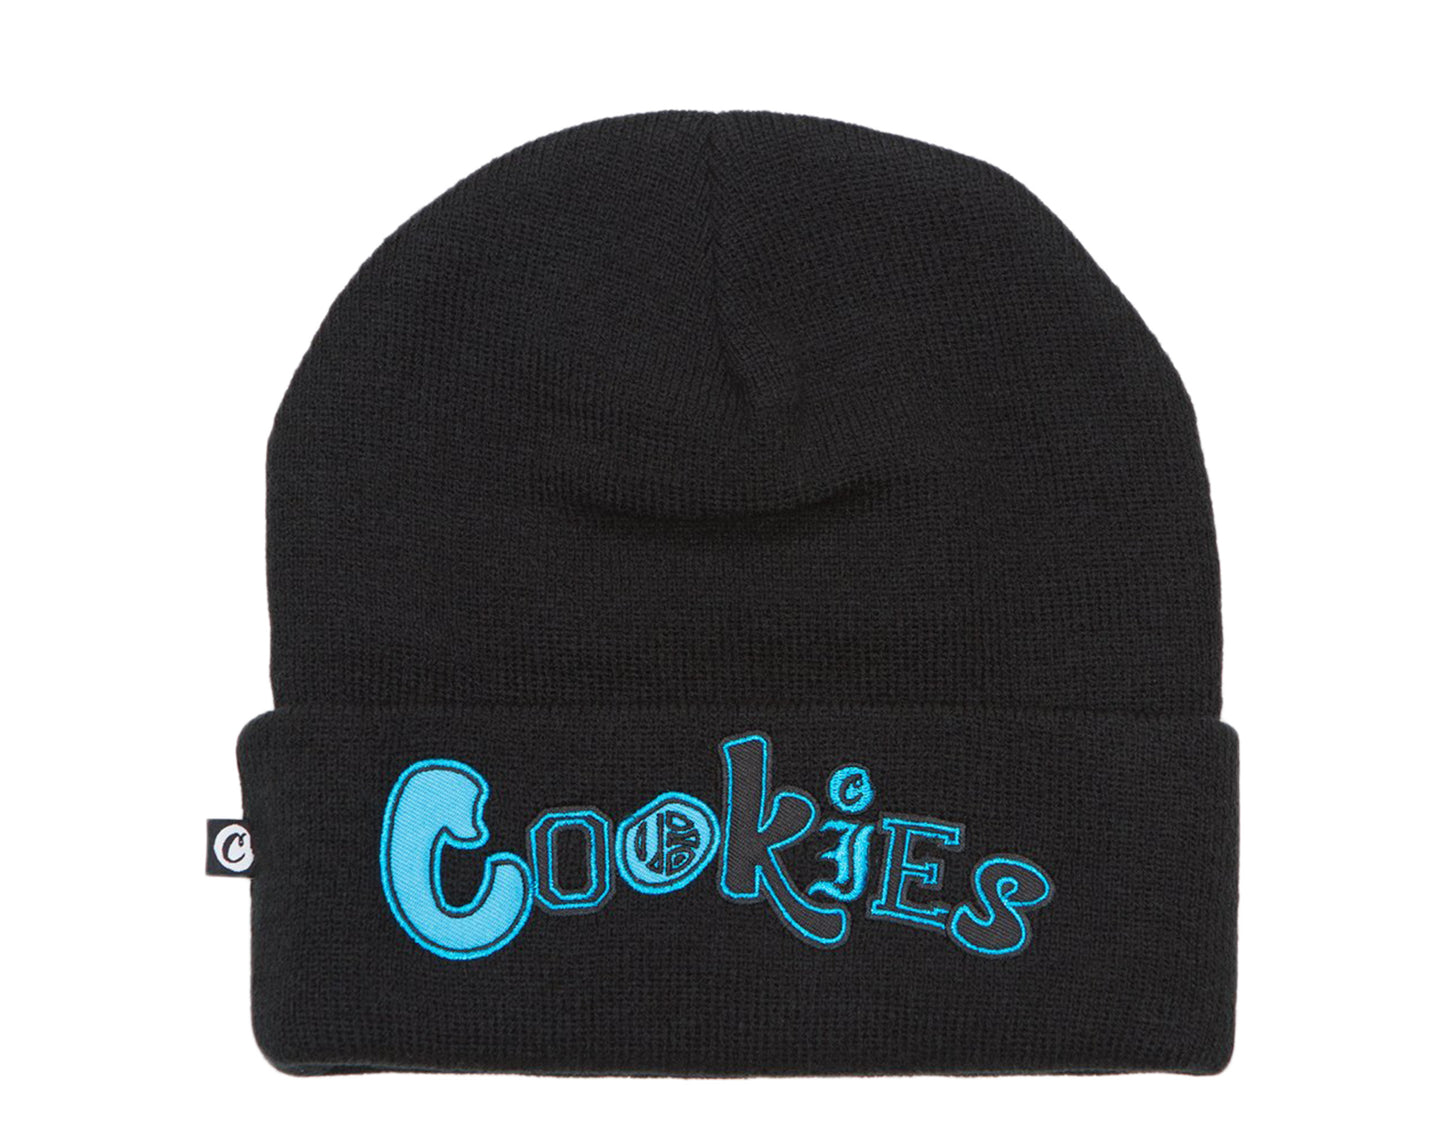 Cookies City Limits 2-Tone Logo Knit Black/Blue Beanie Hat 1545X4123-BLK